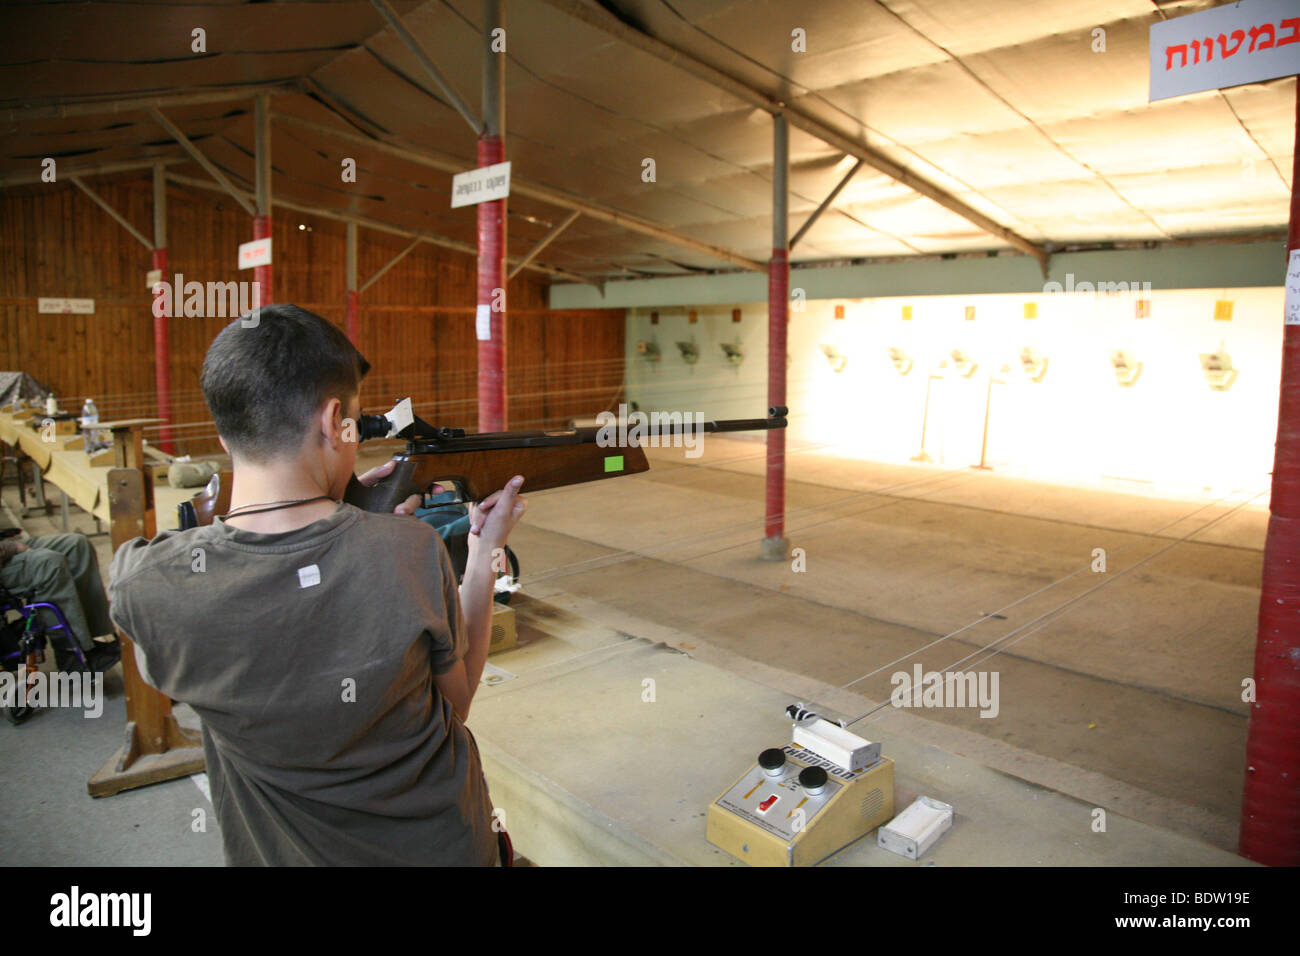 shooting sports at shooting range in degania bet, kibbutz, middle east, asia Stock Photo